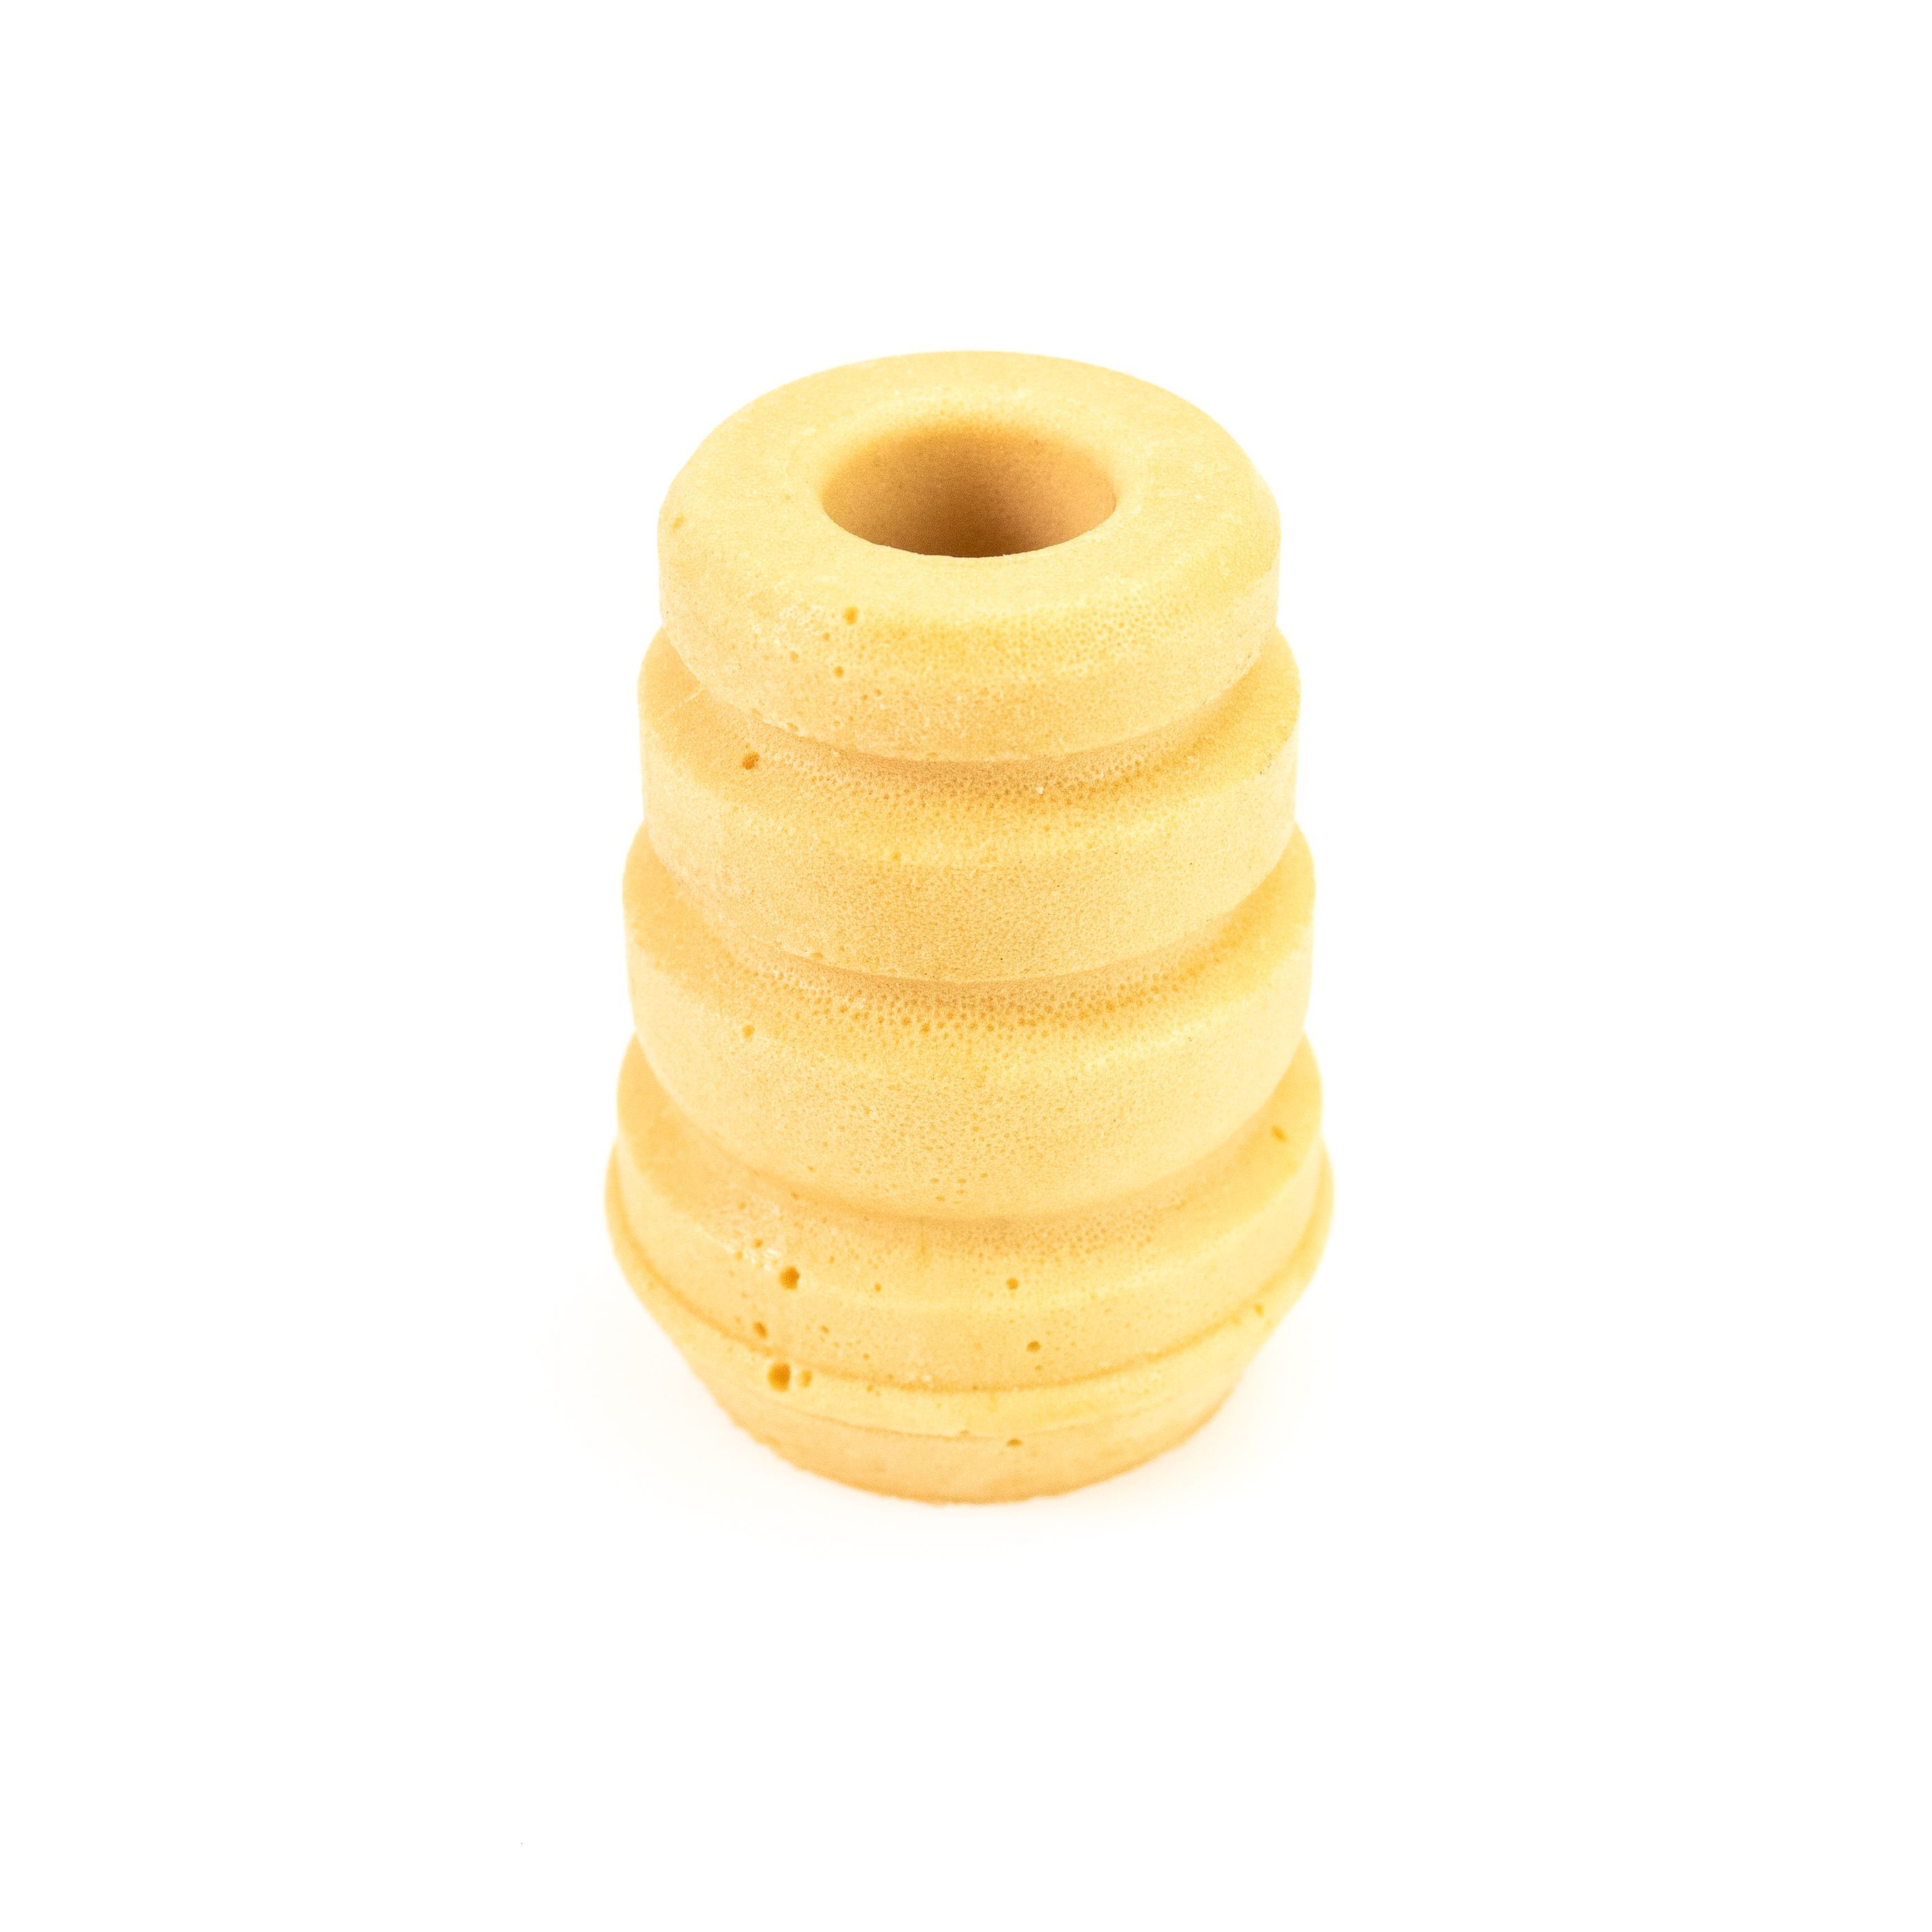 Obrázek produktu RCU piston ring KYB 120214600201 46mm large with hole